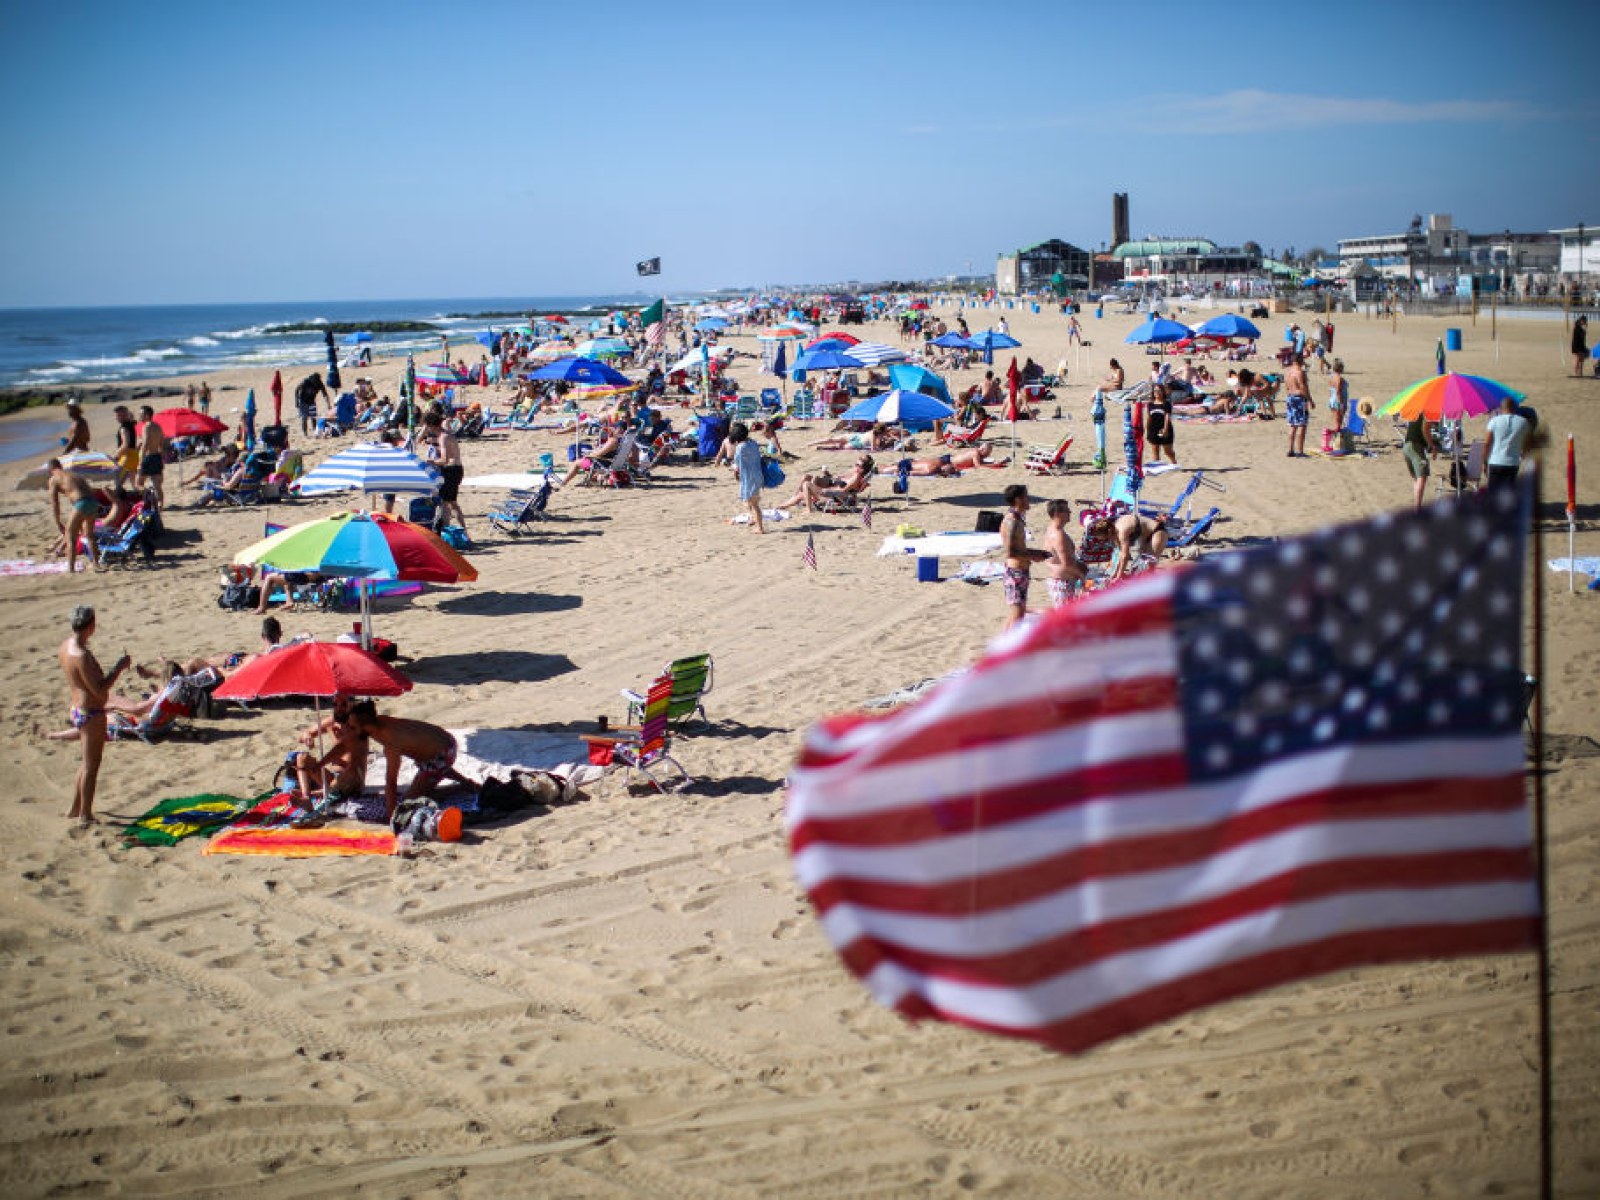 10 Most Popular Beach Towns in America